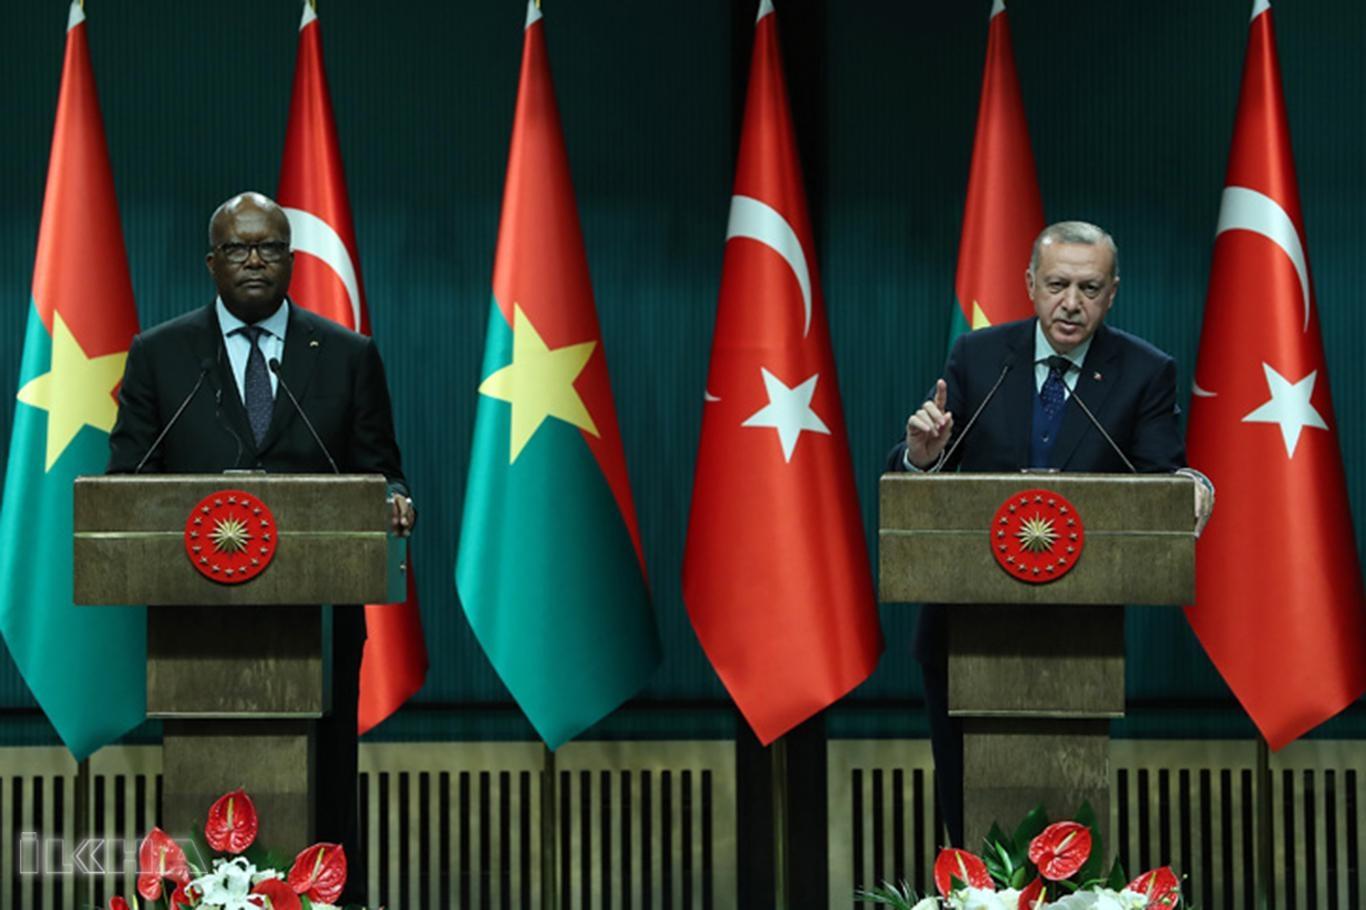 President Erdoğan speaks about military coup in Sudan